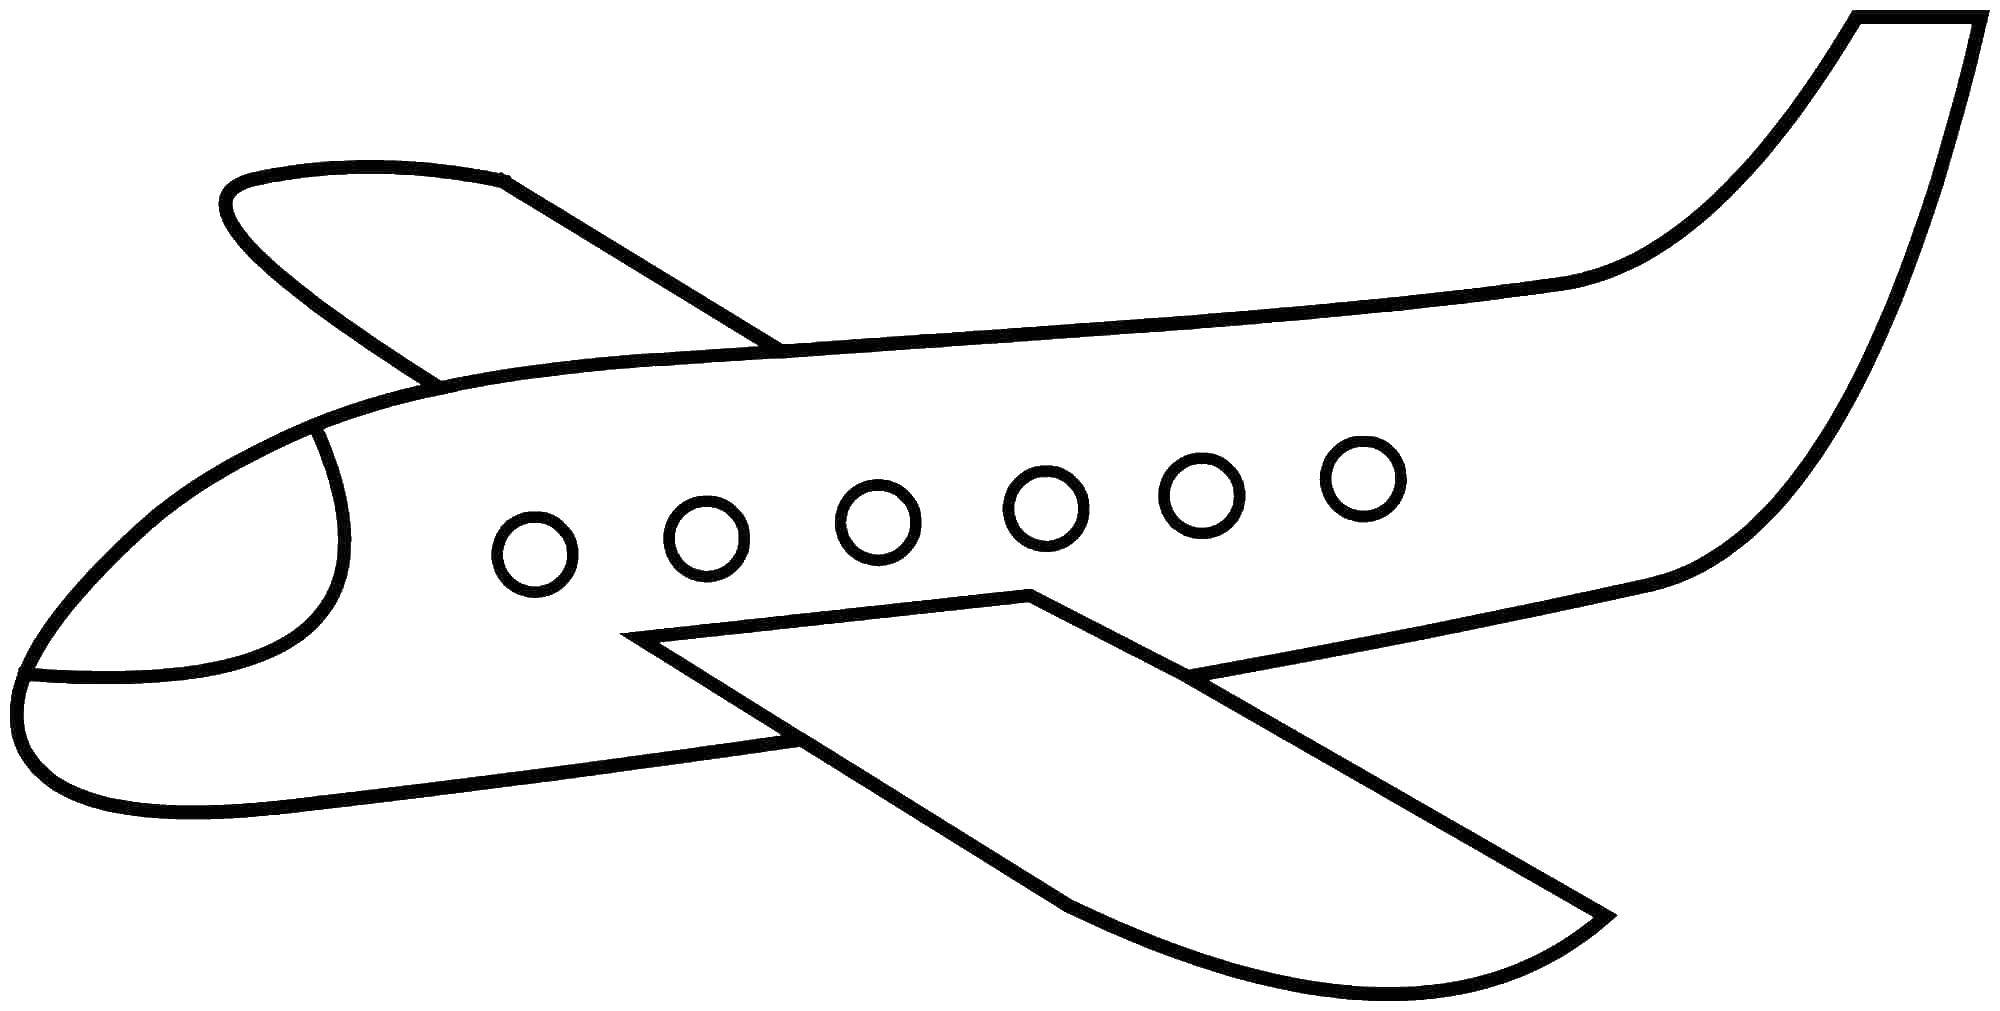 Название: Раскраска Контур самолета. Категория: Самолеты. Теги: самолет, крыло, окна.